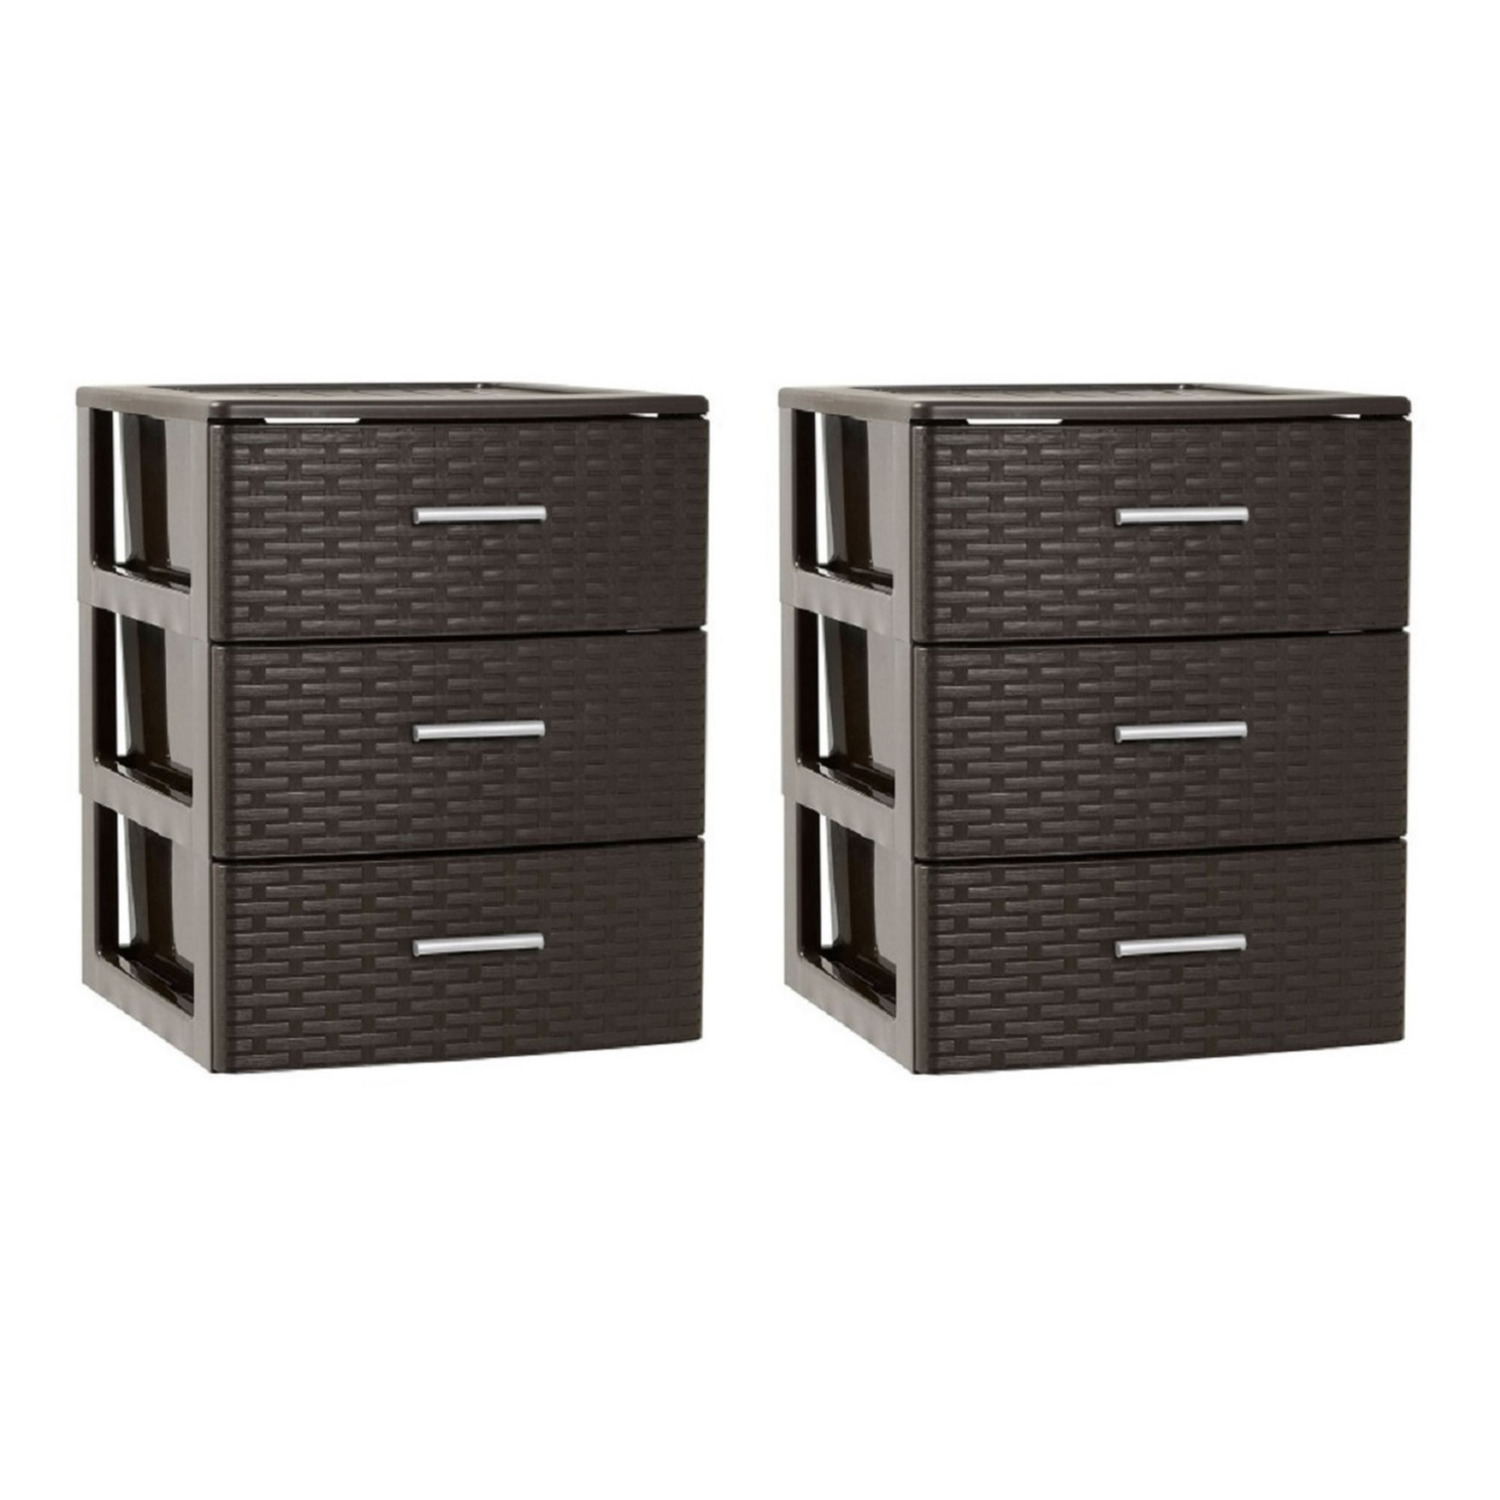 2x stuks ladeblok-bureau organizer met 3 lades rotan bruin 39,5 x 36,5 x 46,5 cm